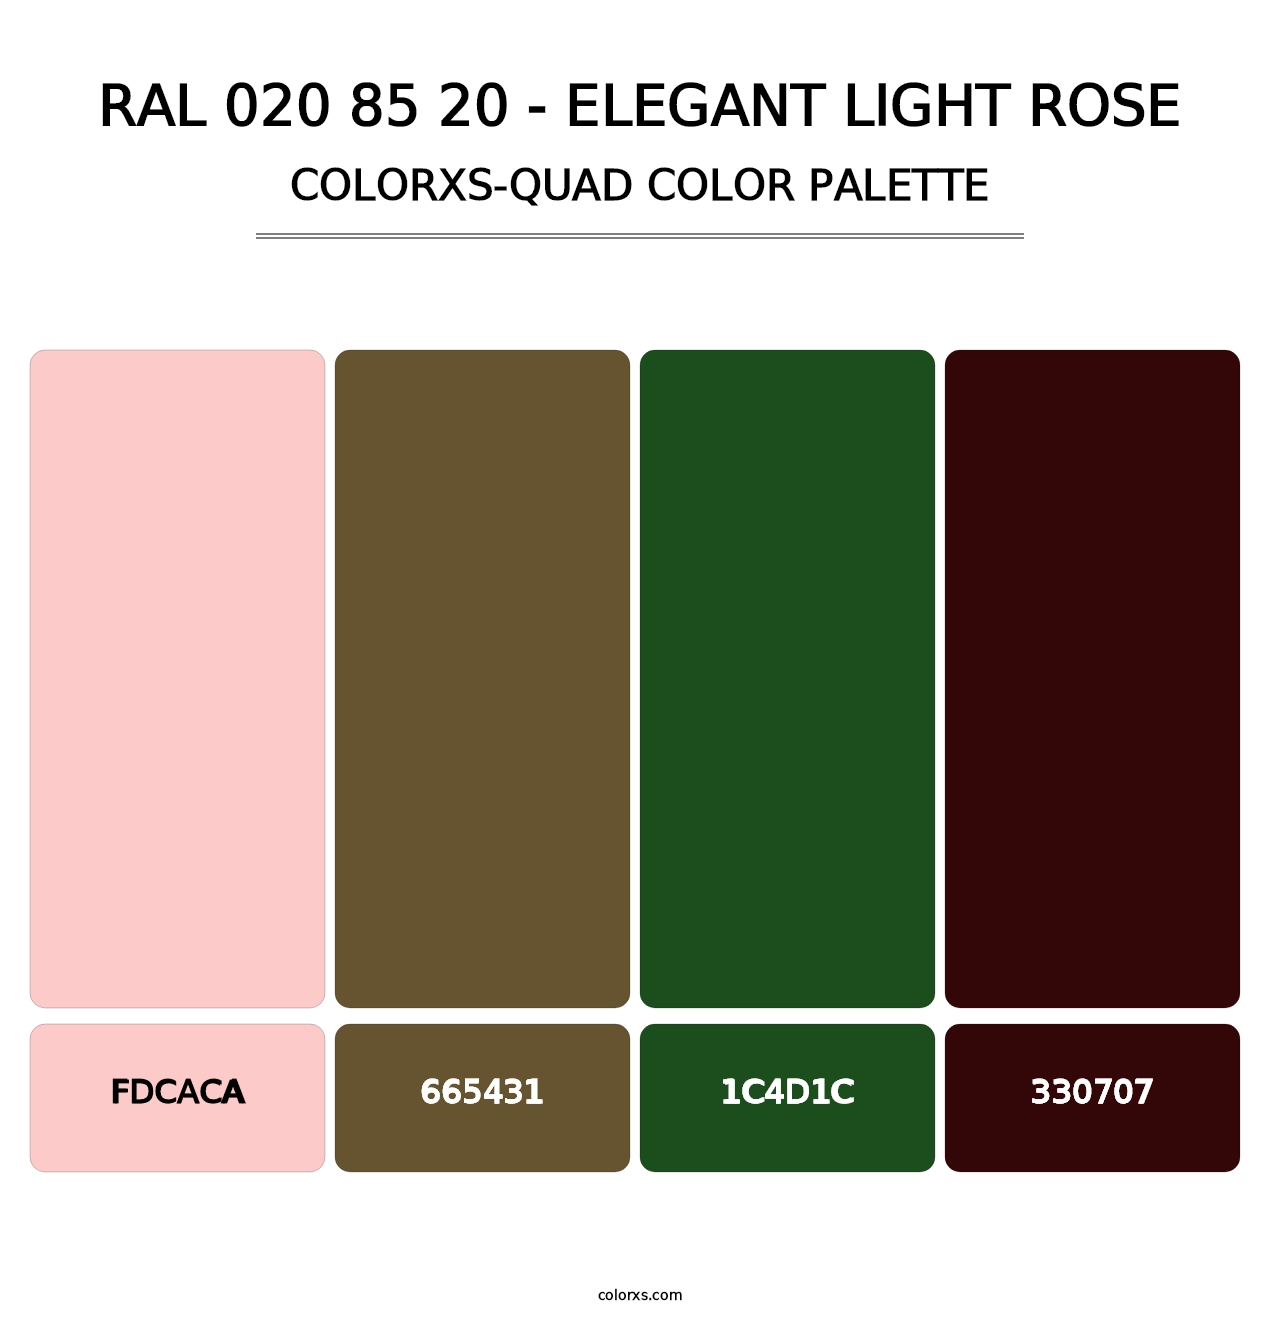 RAL 020 85 20 - Elegant Light Rose - Colorxs Quad Palette